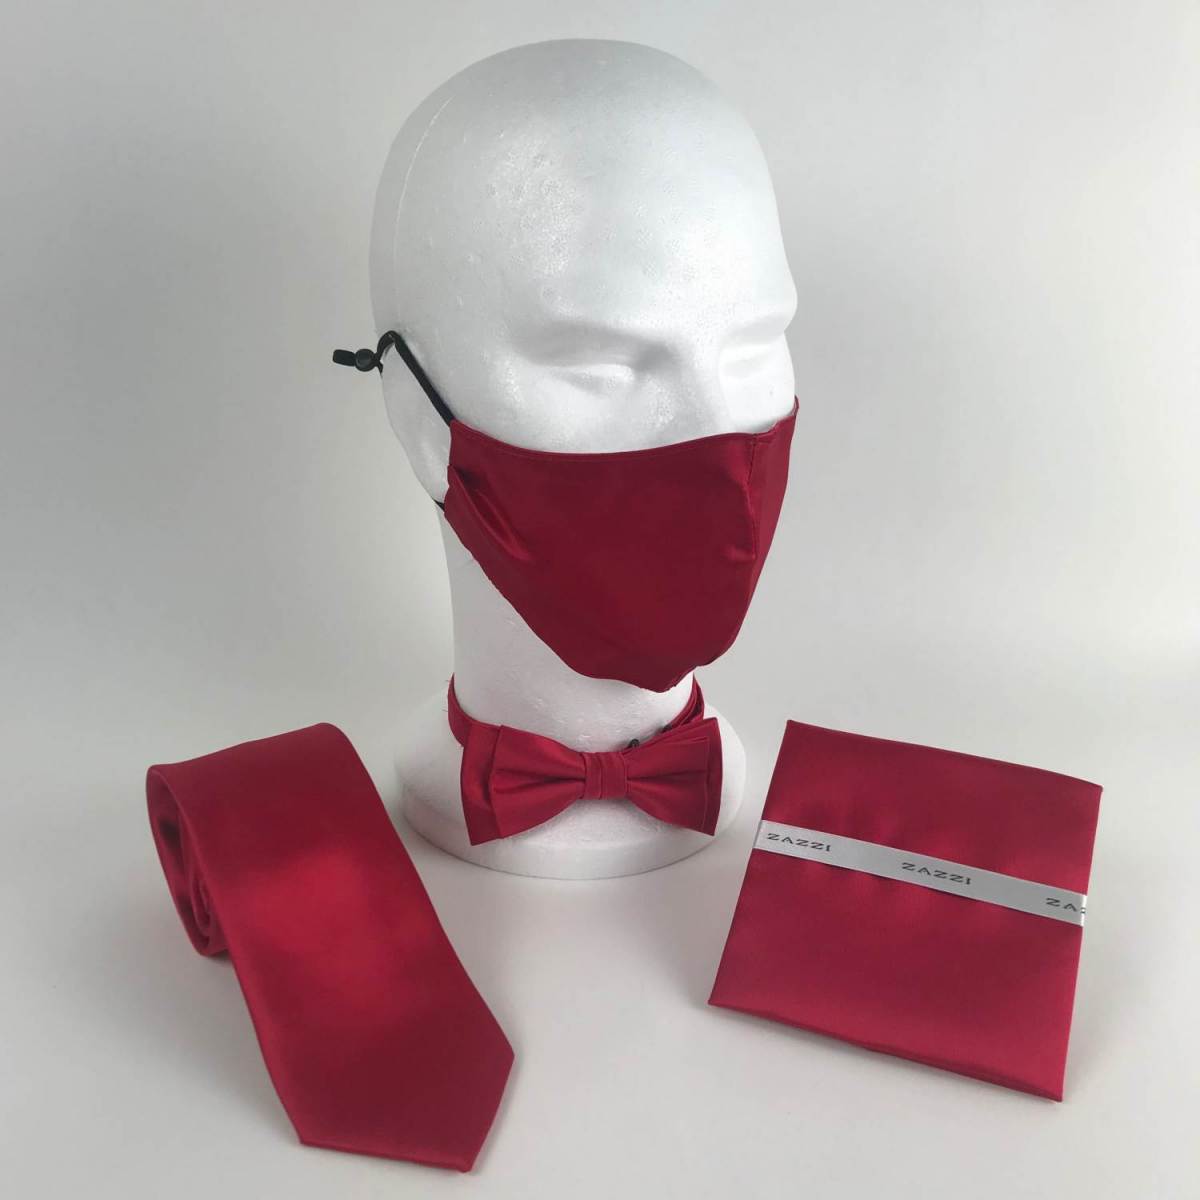 B1764 02 Red FM. mens ties facemasks con murphys menswear cork scaled - - Con Murphys Menswear